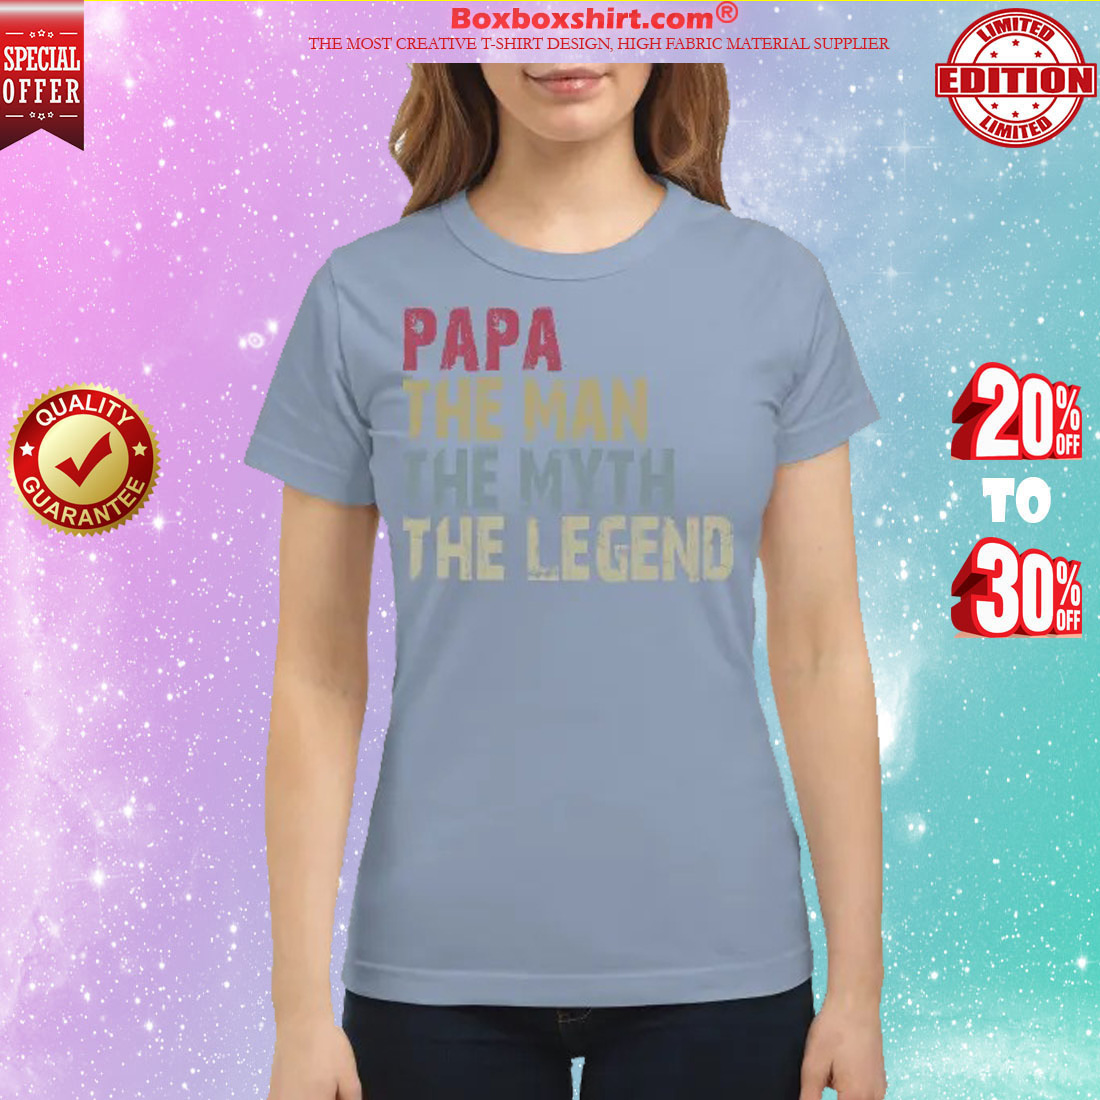 Papa the man the myth the legend classic shirt